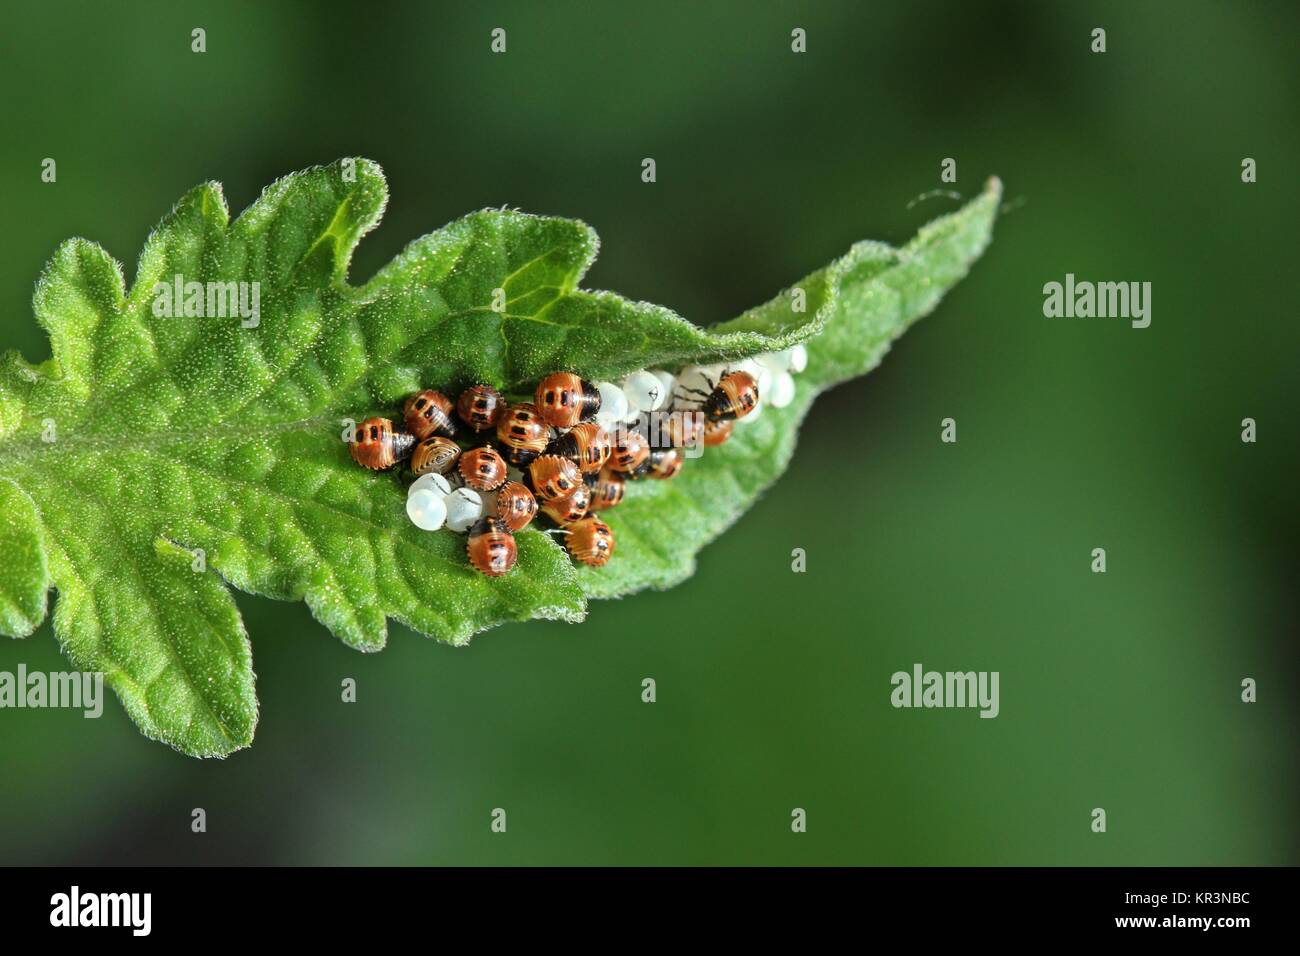 newly hatched nymphs of the green stink bug (palomena prasina) on tomato leaf Stock Photo